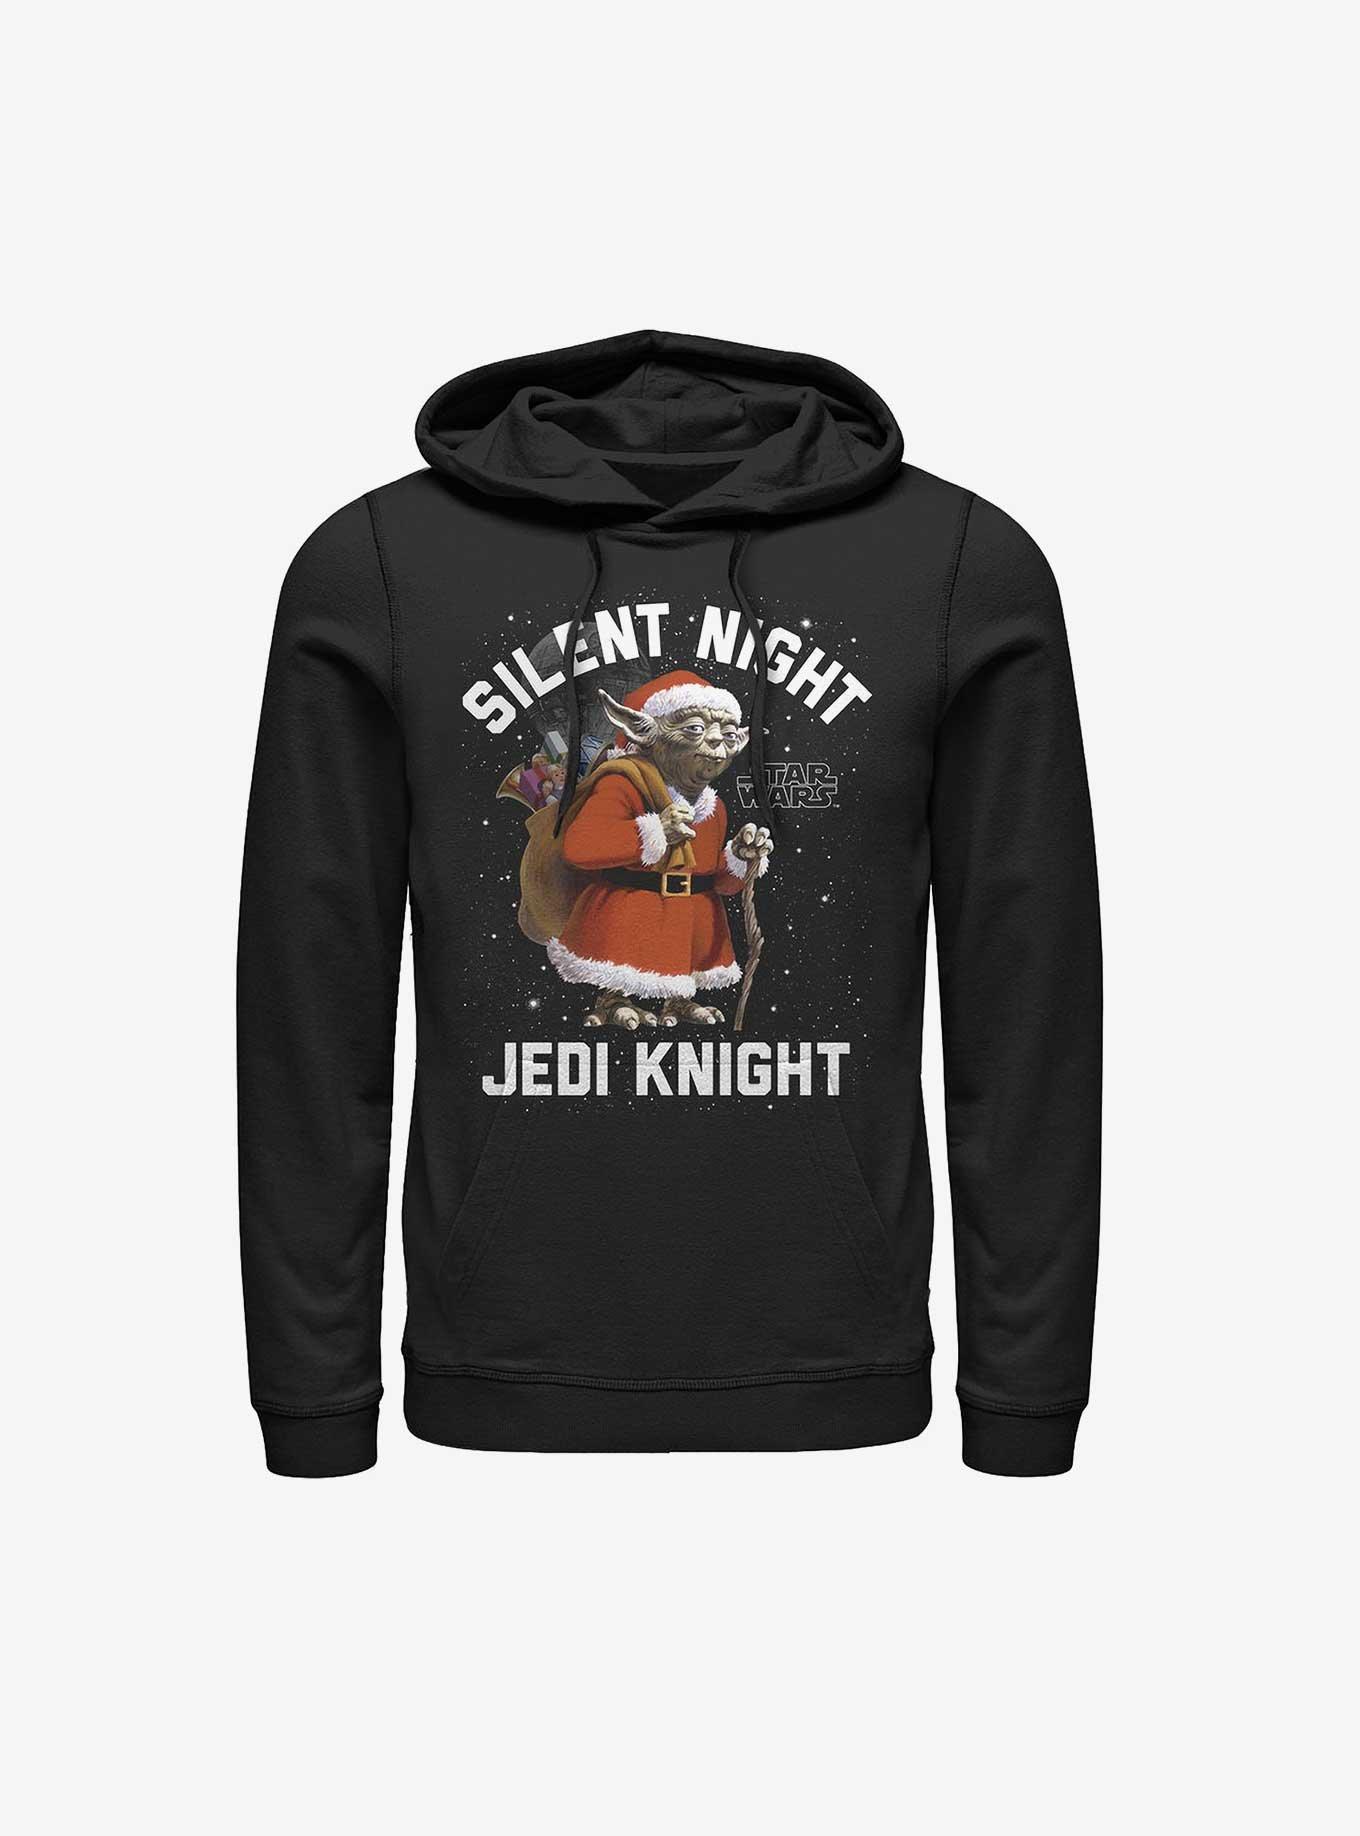 Star Wars Santa Yoda Silent Night Jedi Knight Hoodie, BLACK, hi-res